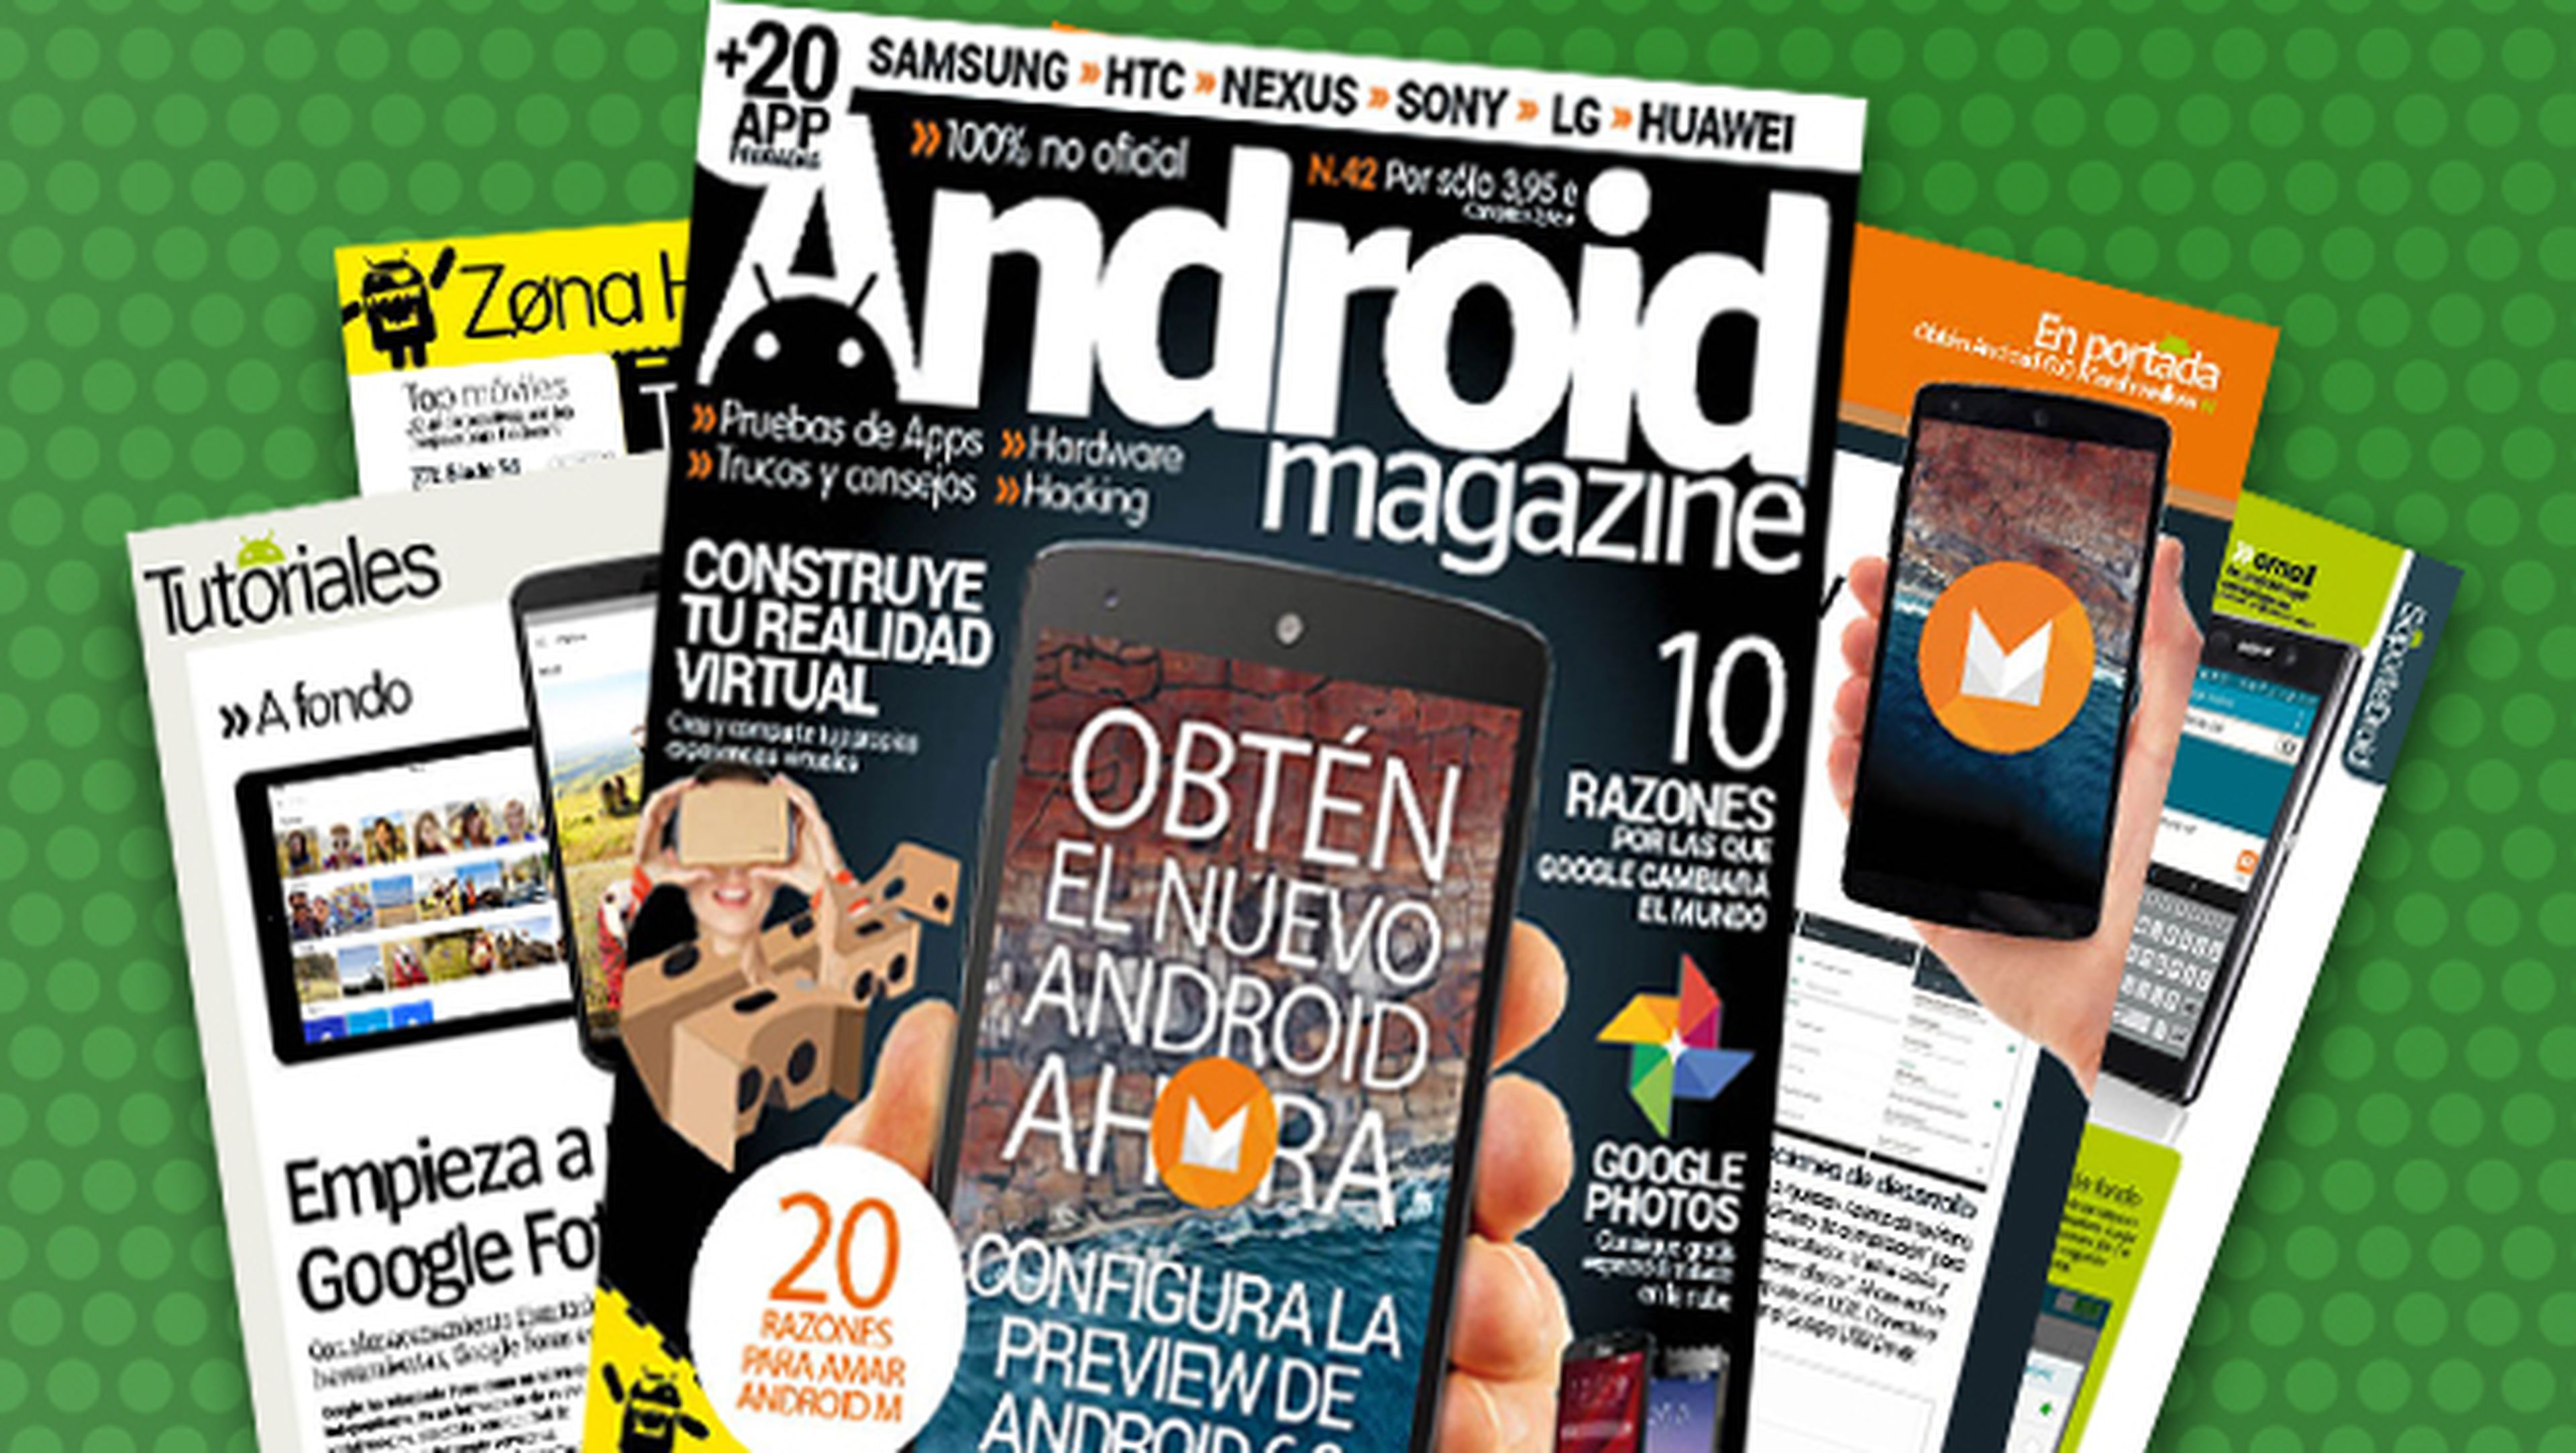 Android Magazine 42